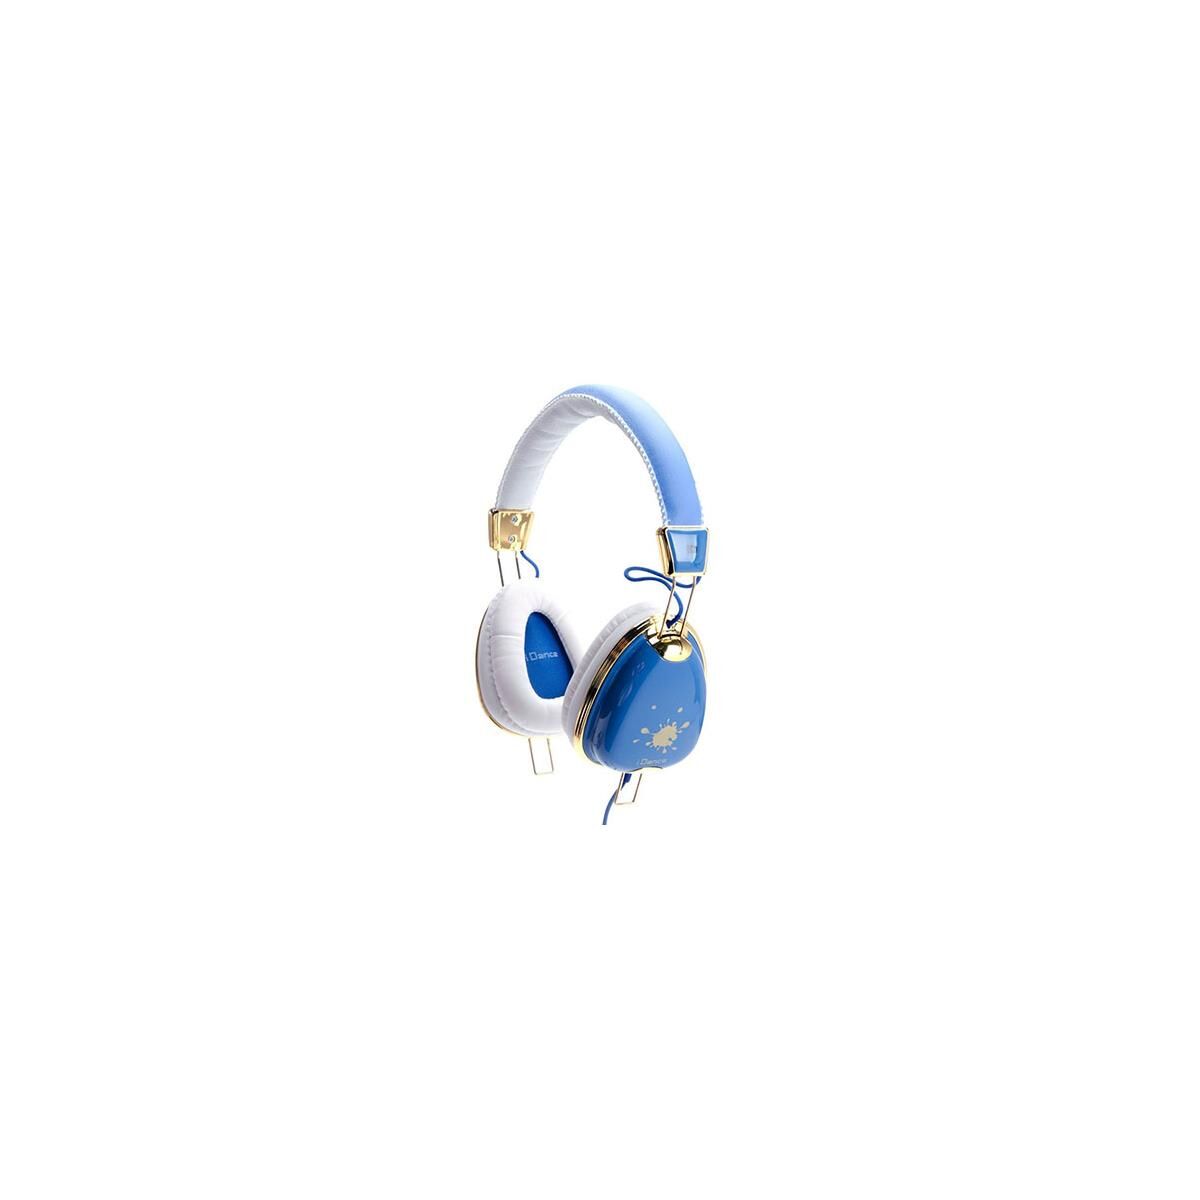 IDANCE iDance Funky Lightweight Headphones with Inline Mic, Eclectic Blue